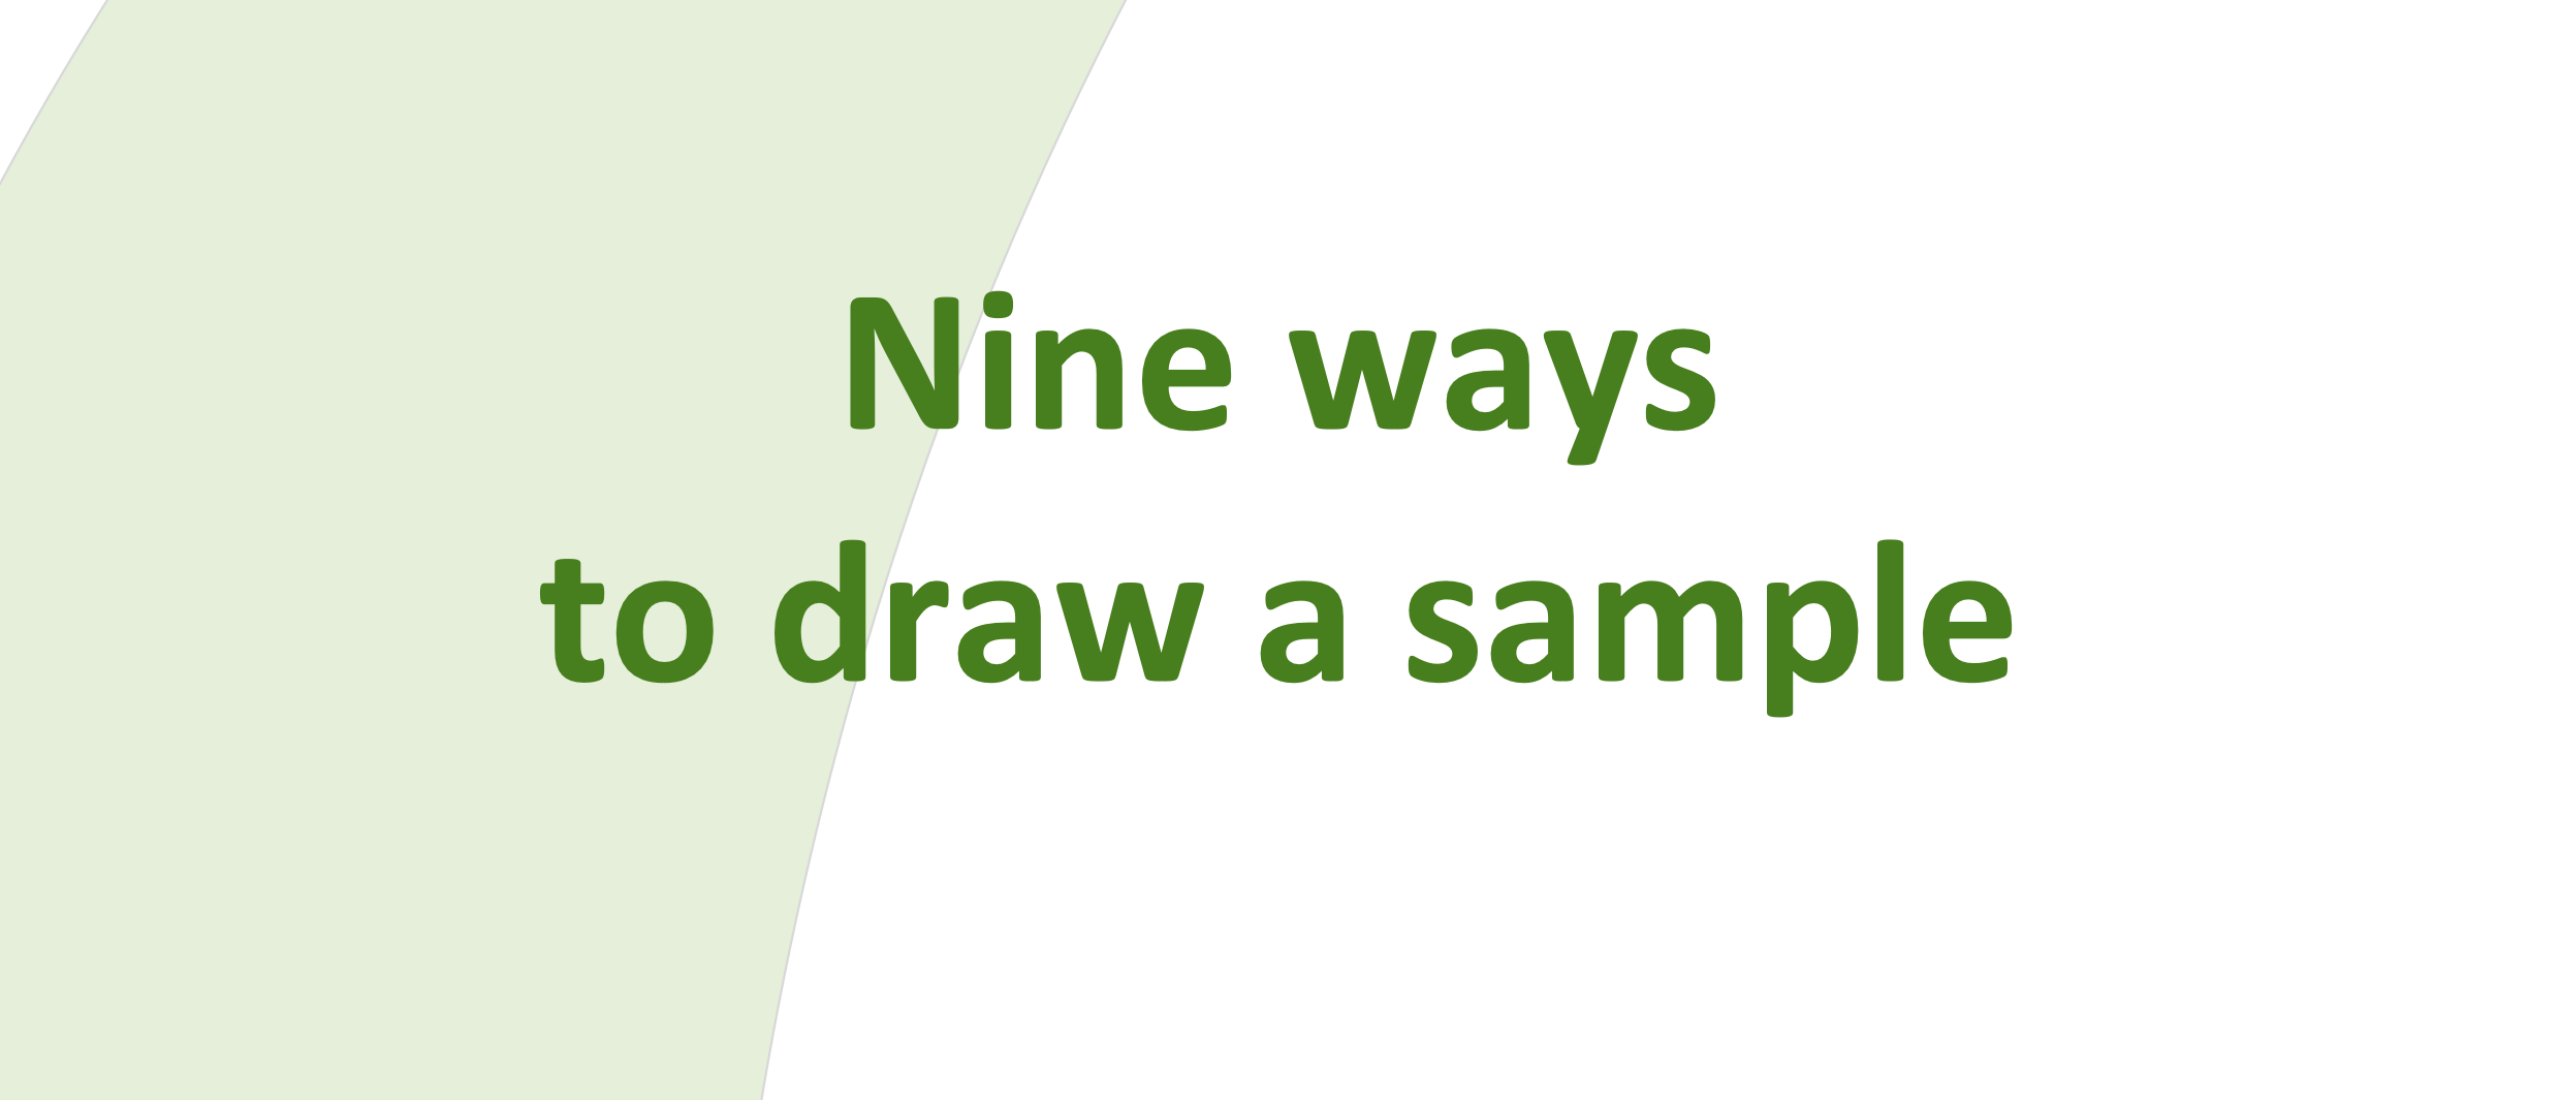 Manual Nine ways to draw a sample